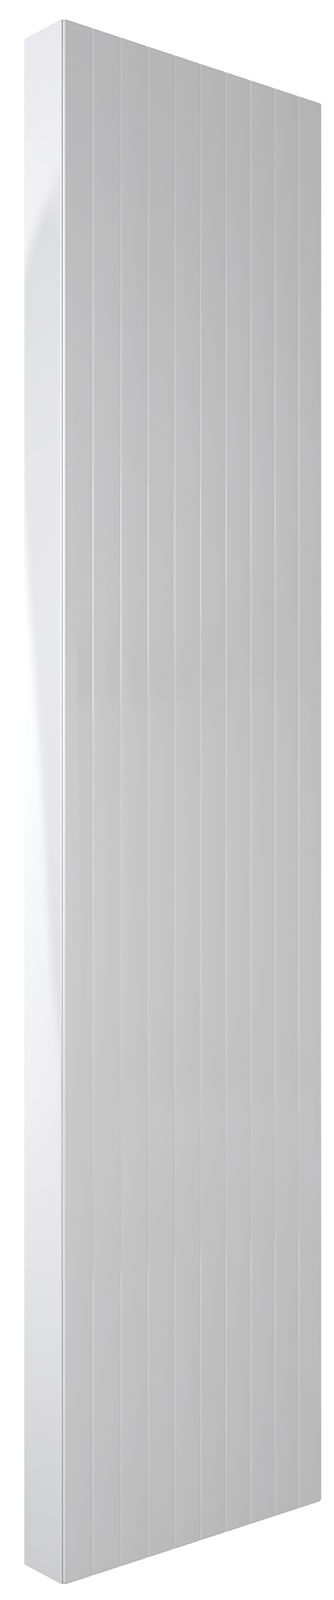 Stelrad Softline Deco Vertical radiator loyalty reward